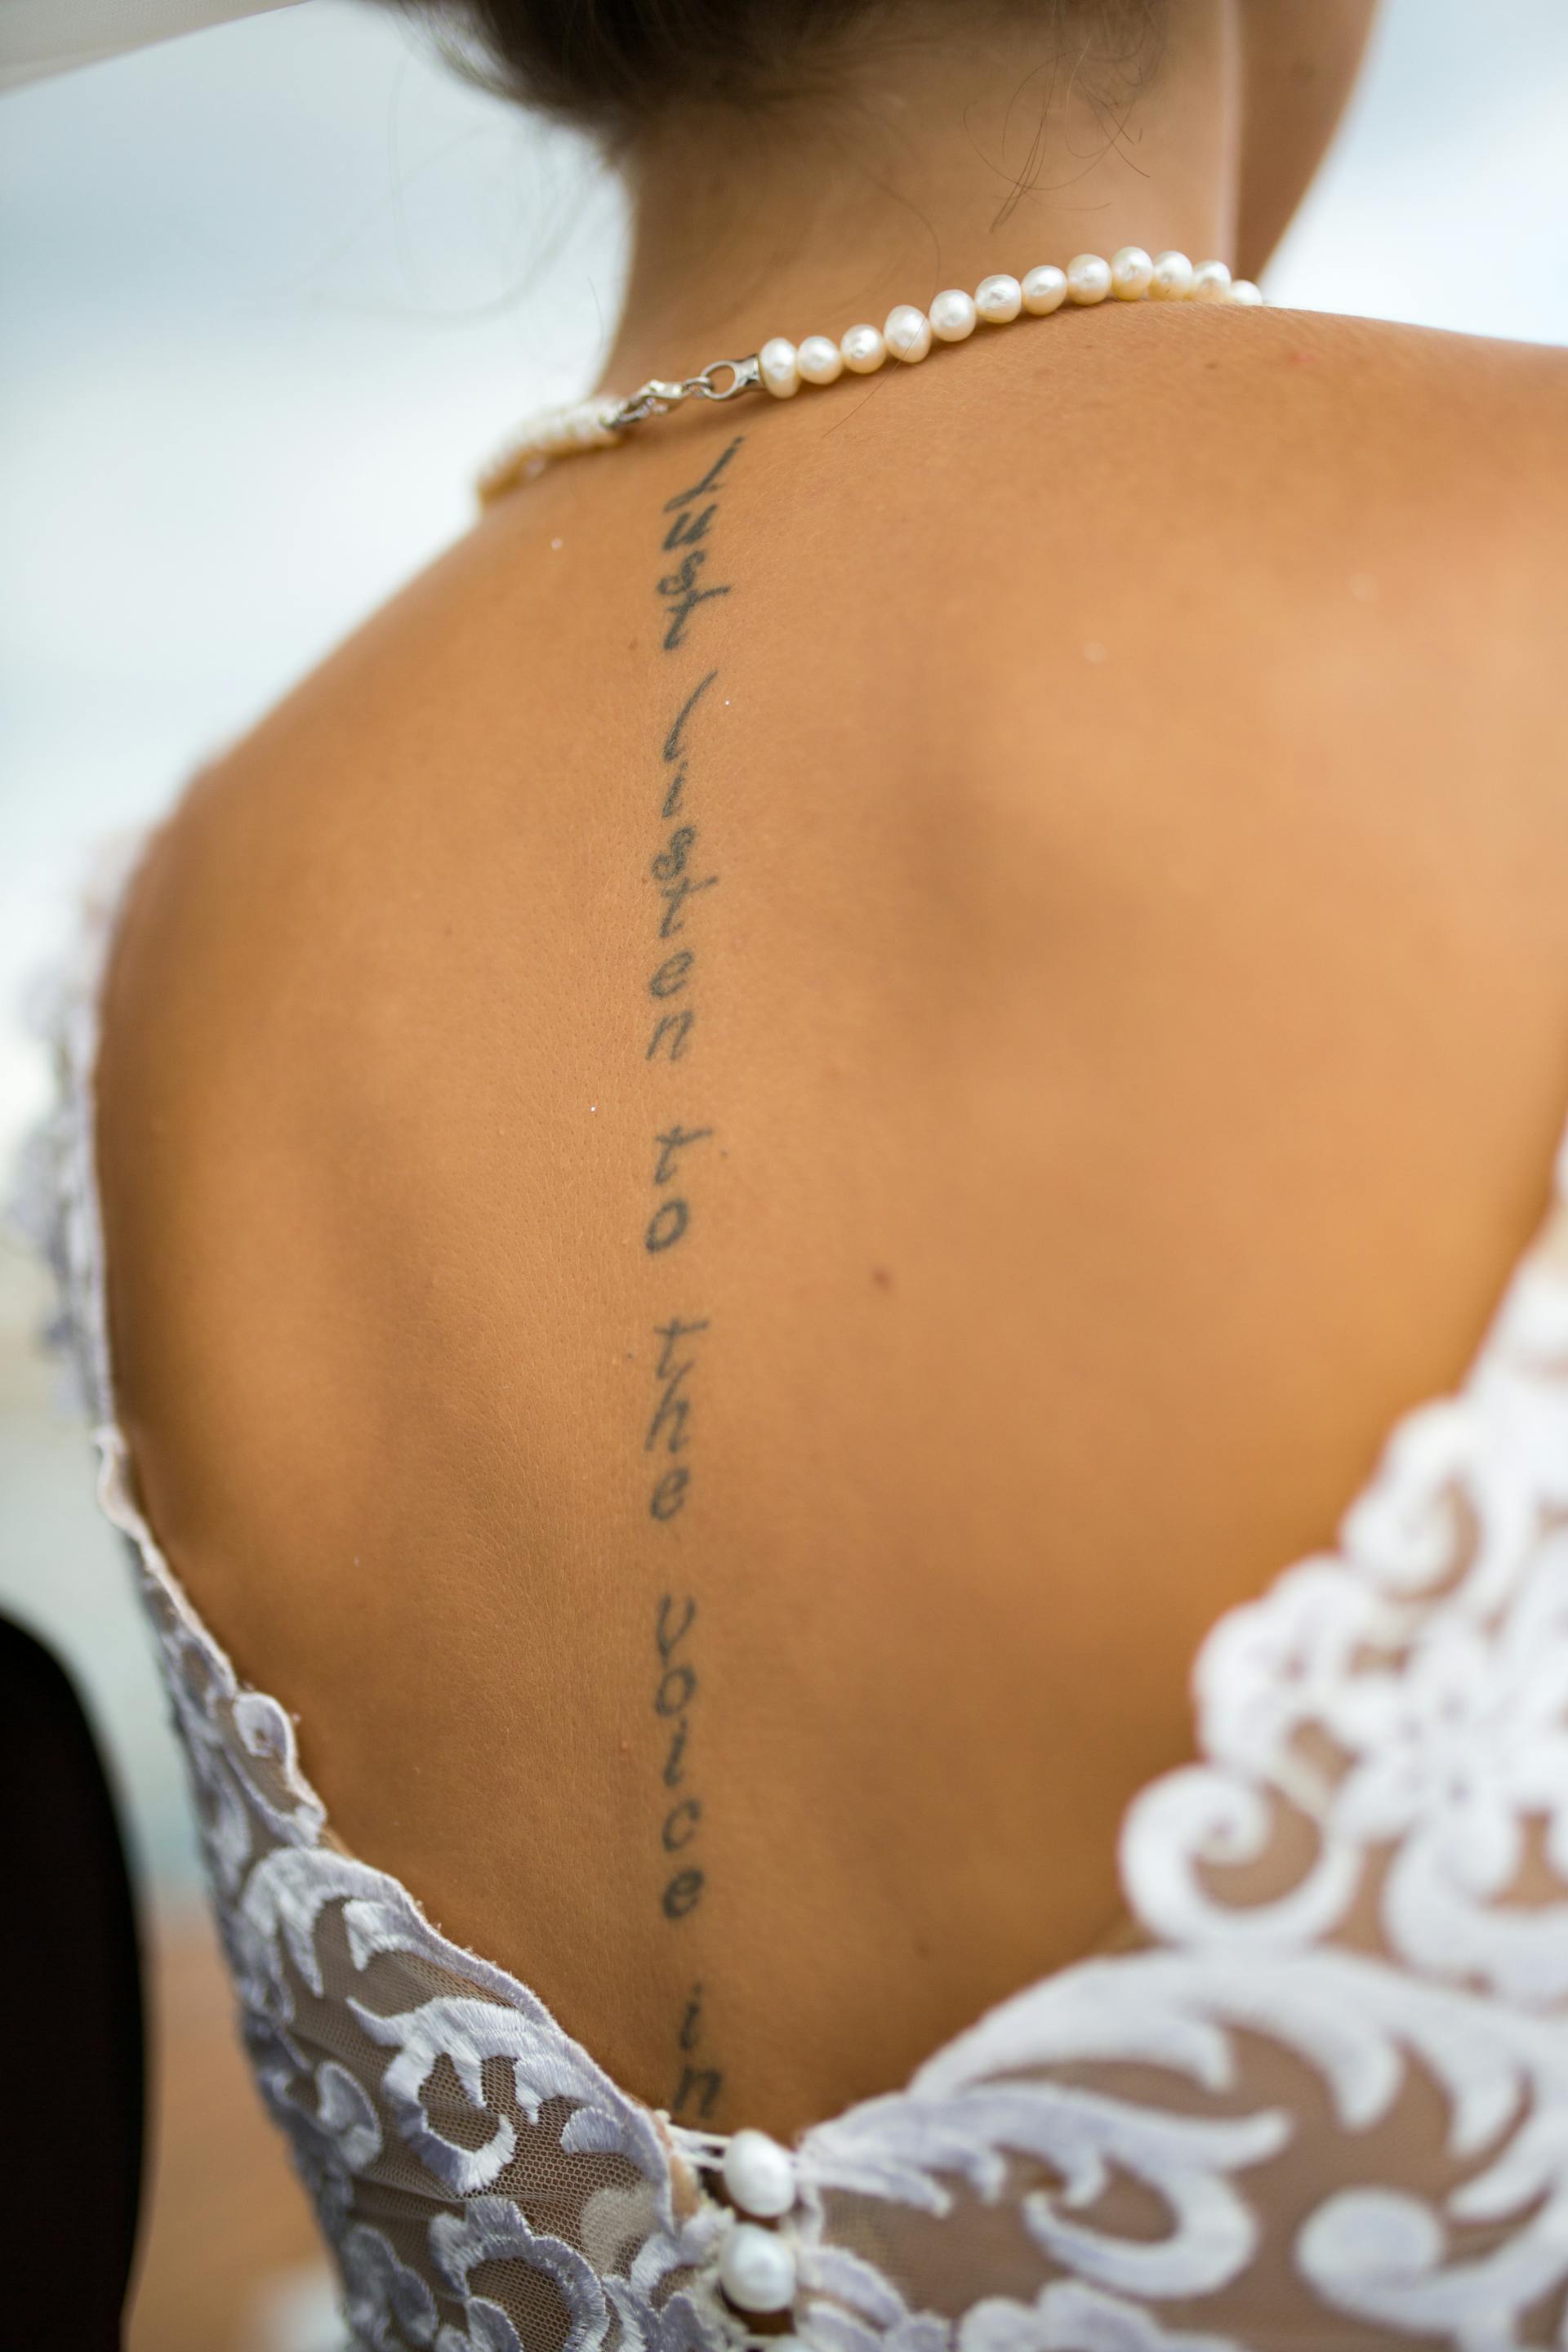 Le dos de la robe de mariée d'une mariée | Source : Pexels